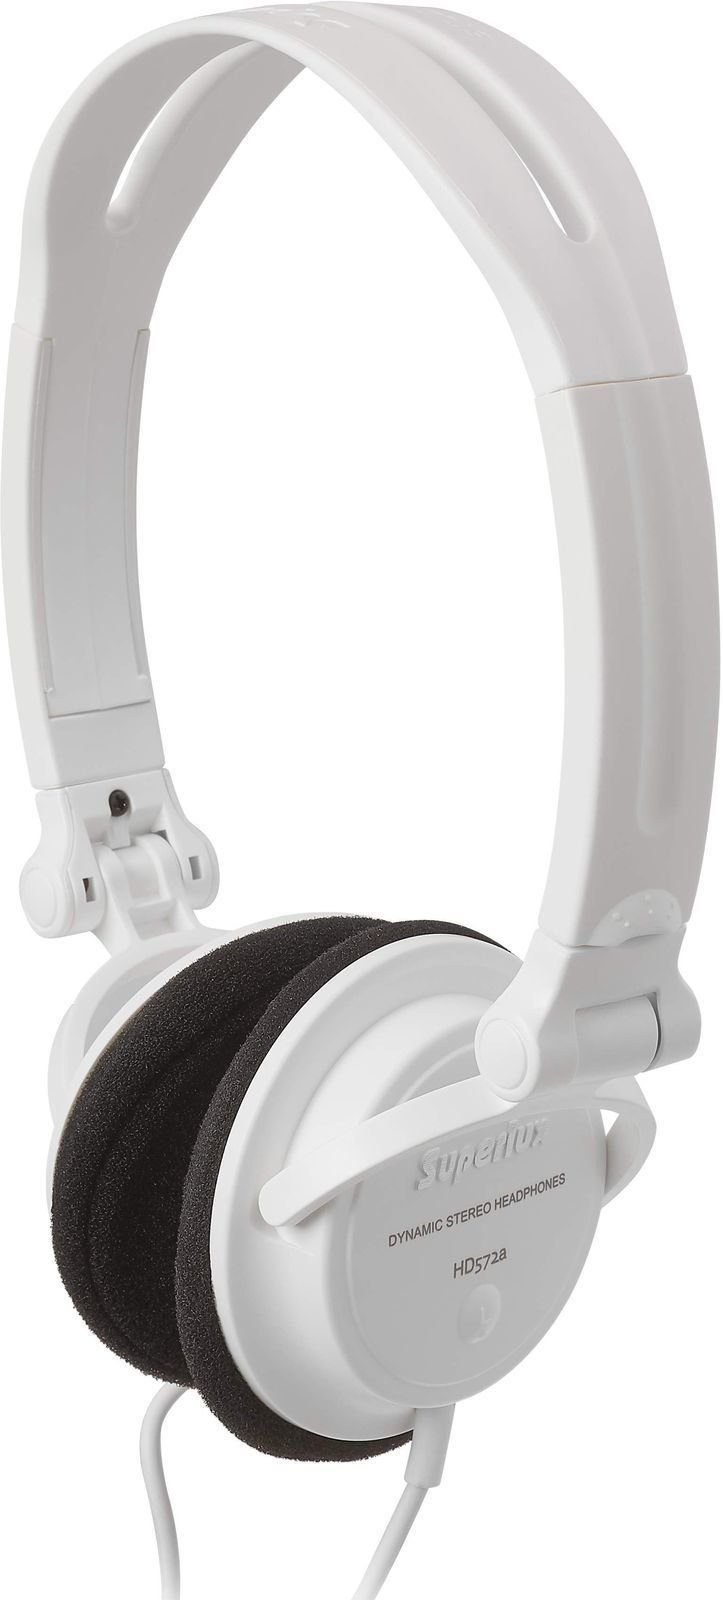 Auscultadores on-ear Superlux HD572A Branco